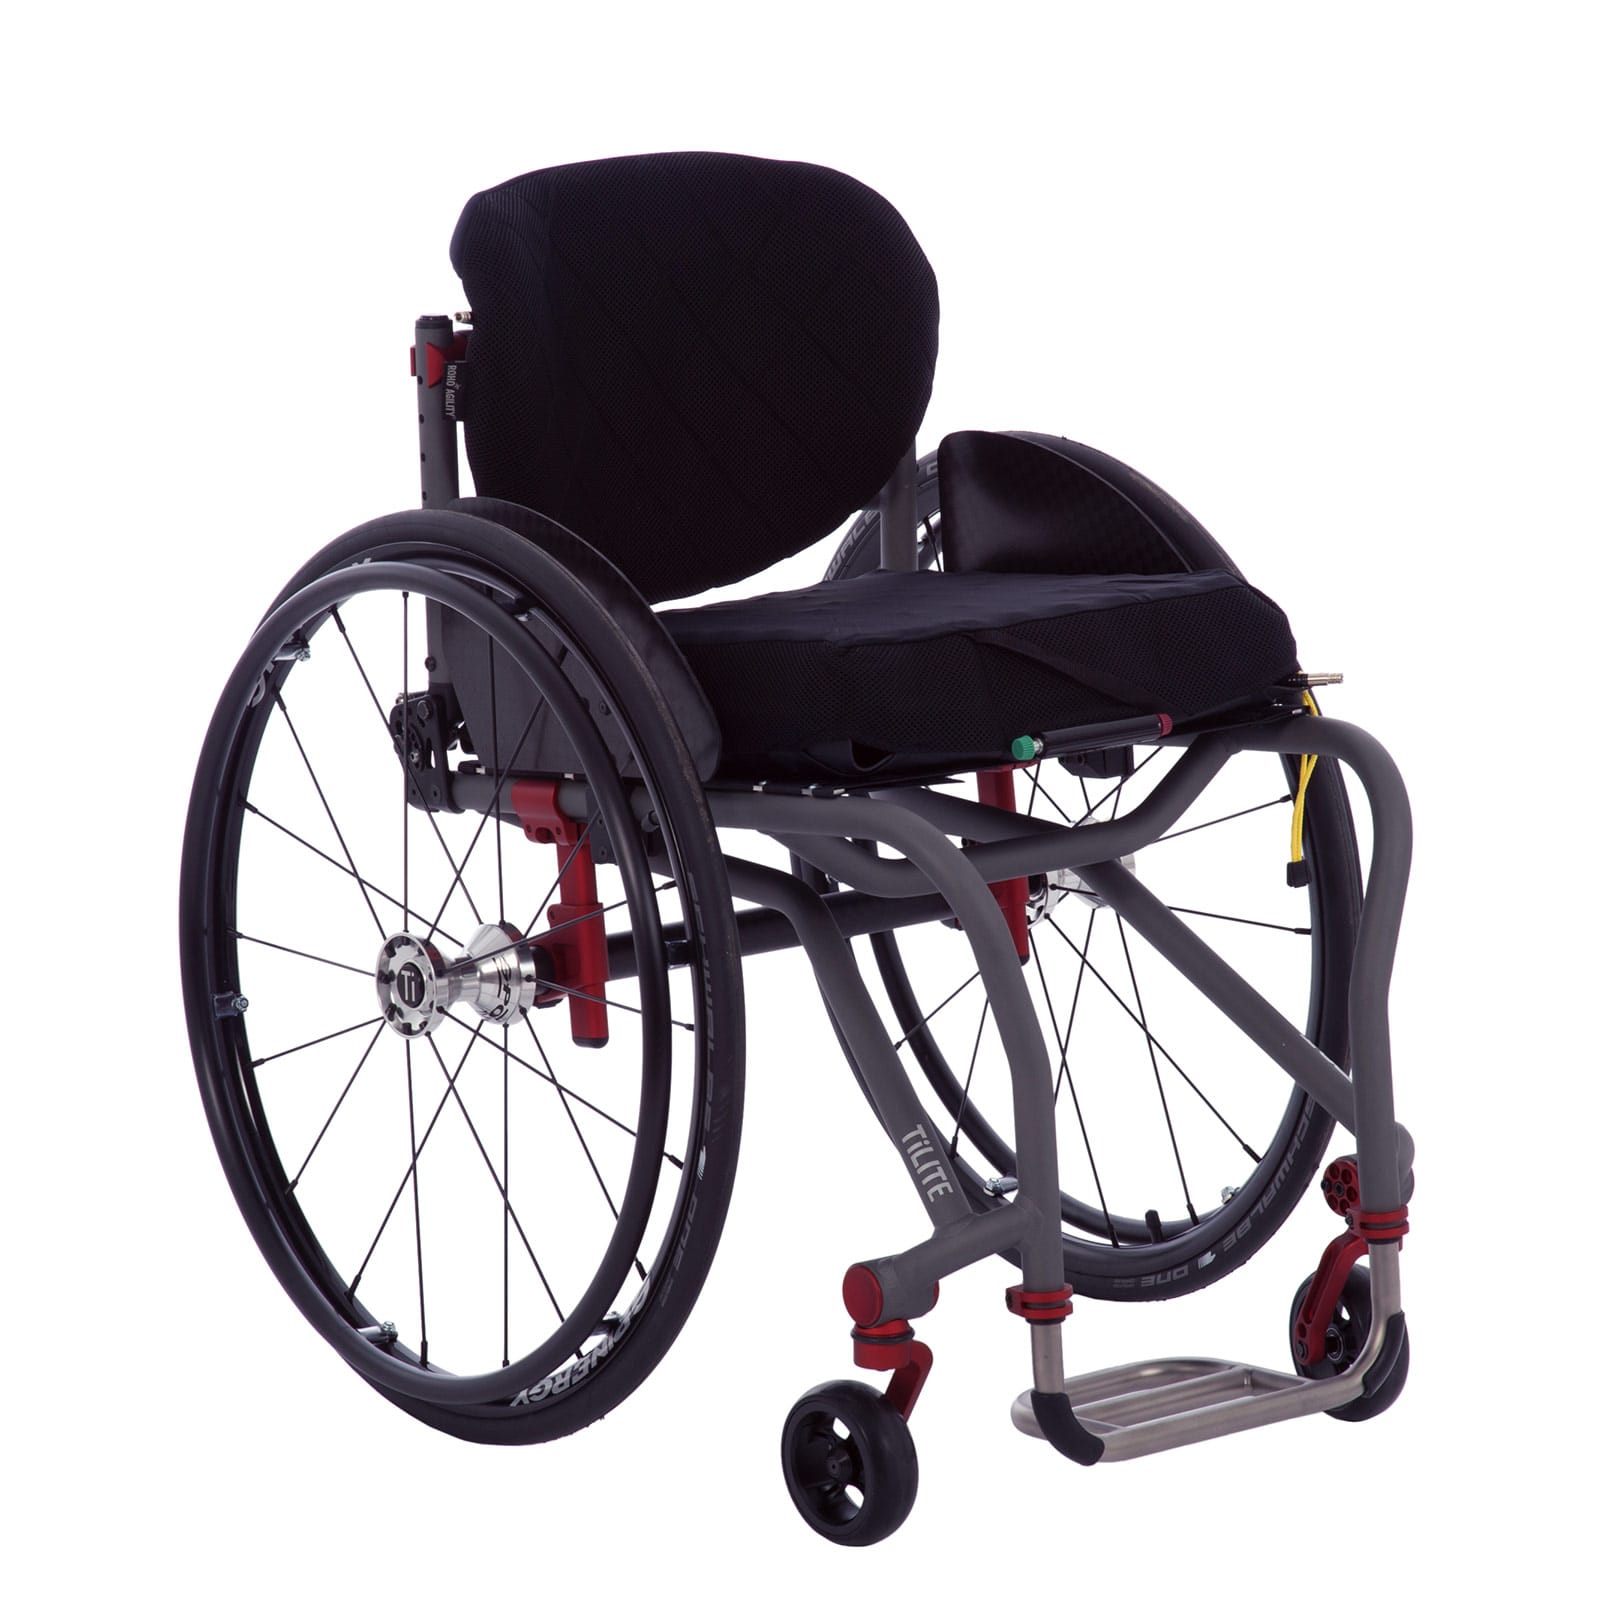 TiLite AeroT Manual Wheelchair